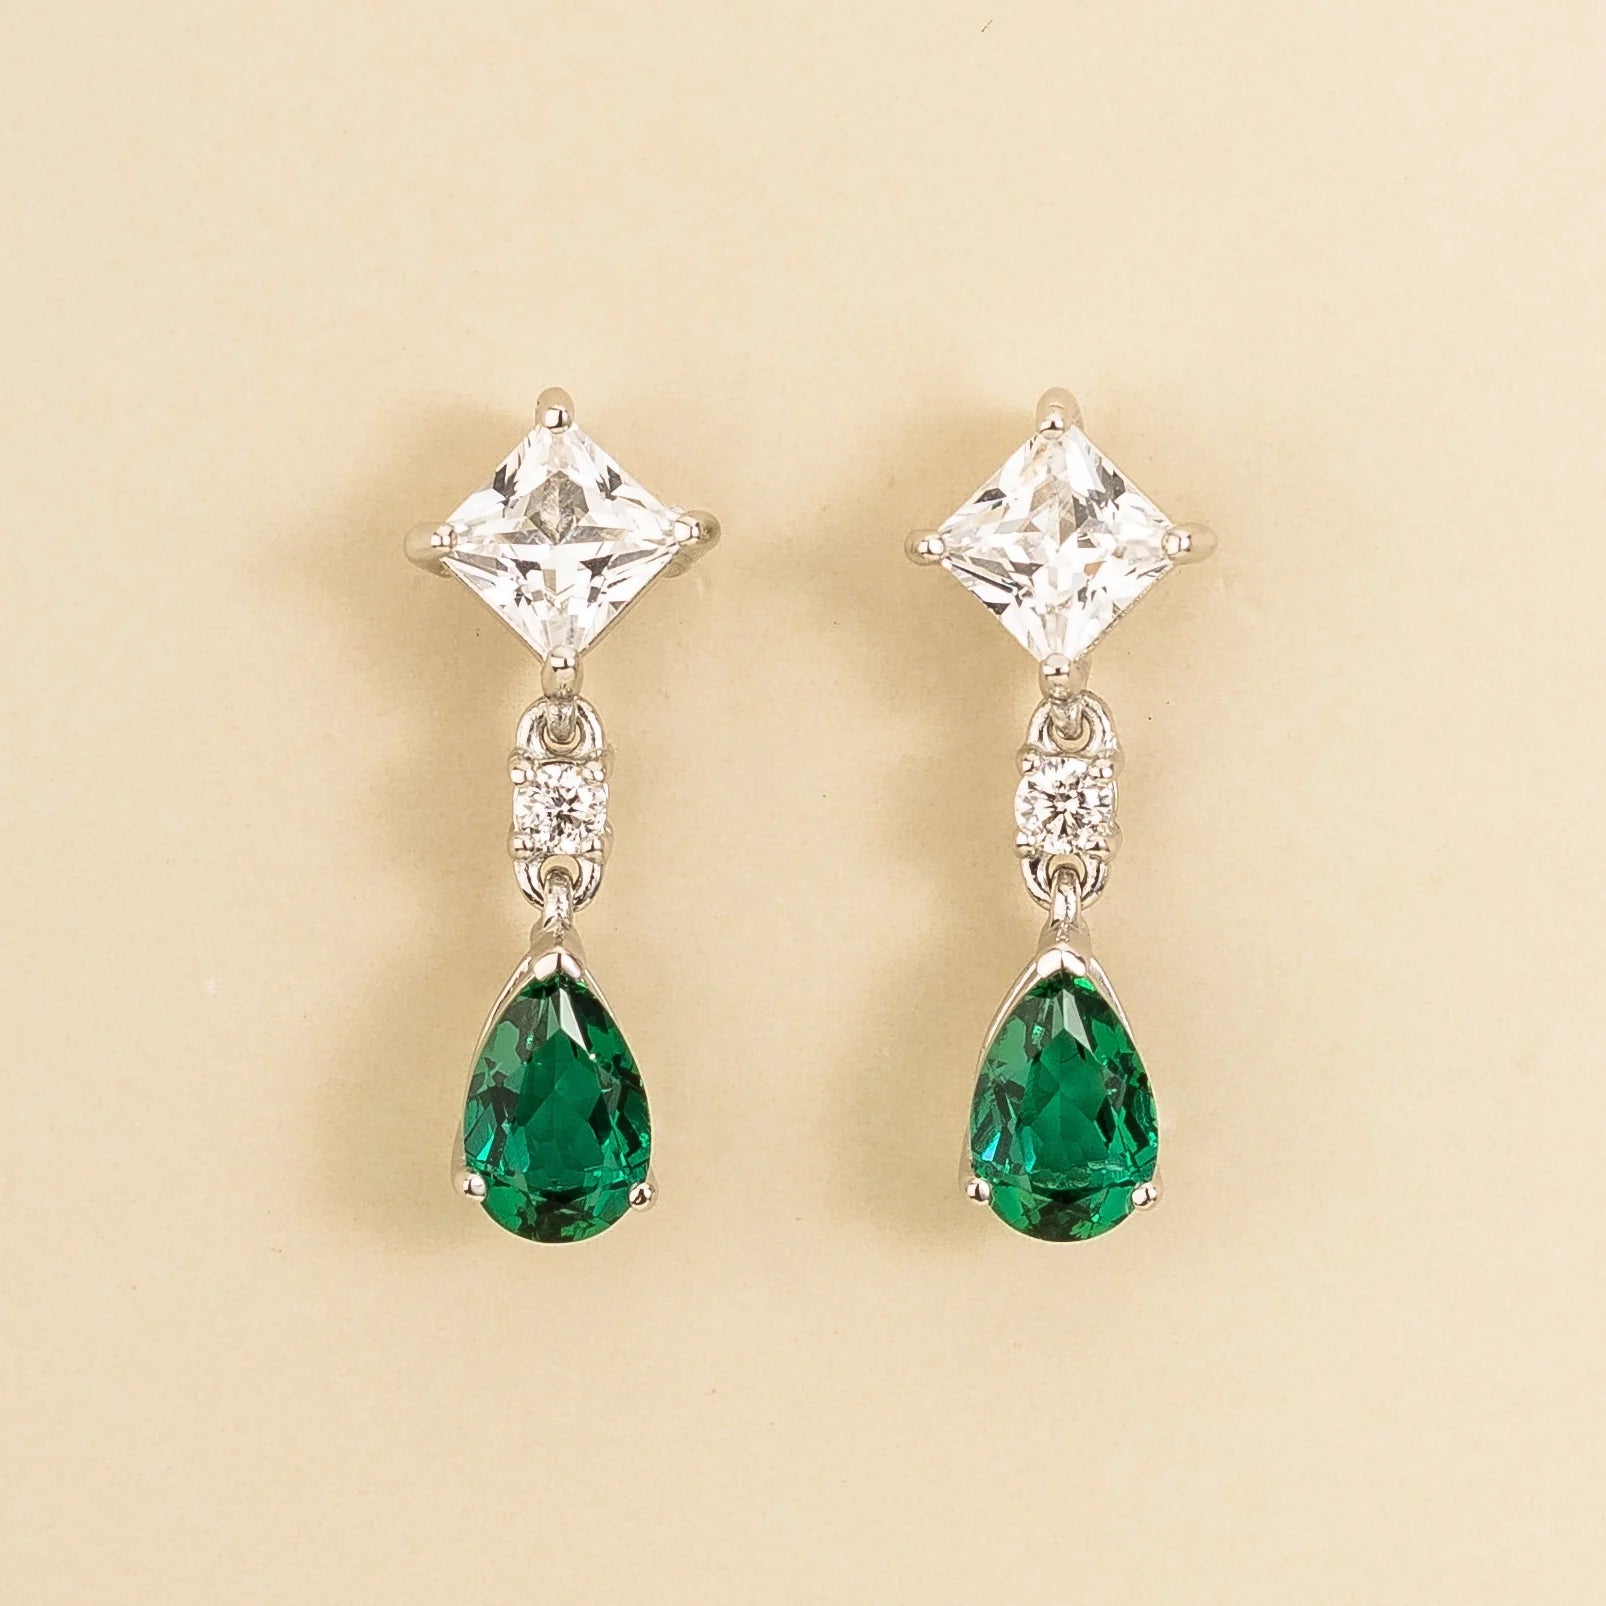 Ori White Gold Earrings Set With White Sapphire Emerald and Diamond By Bespoke Jewellery London